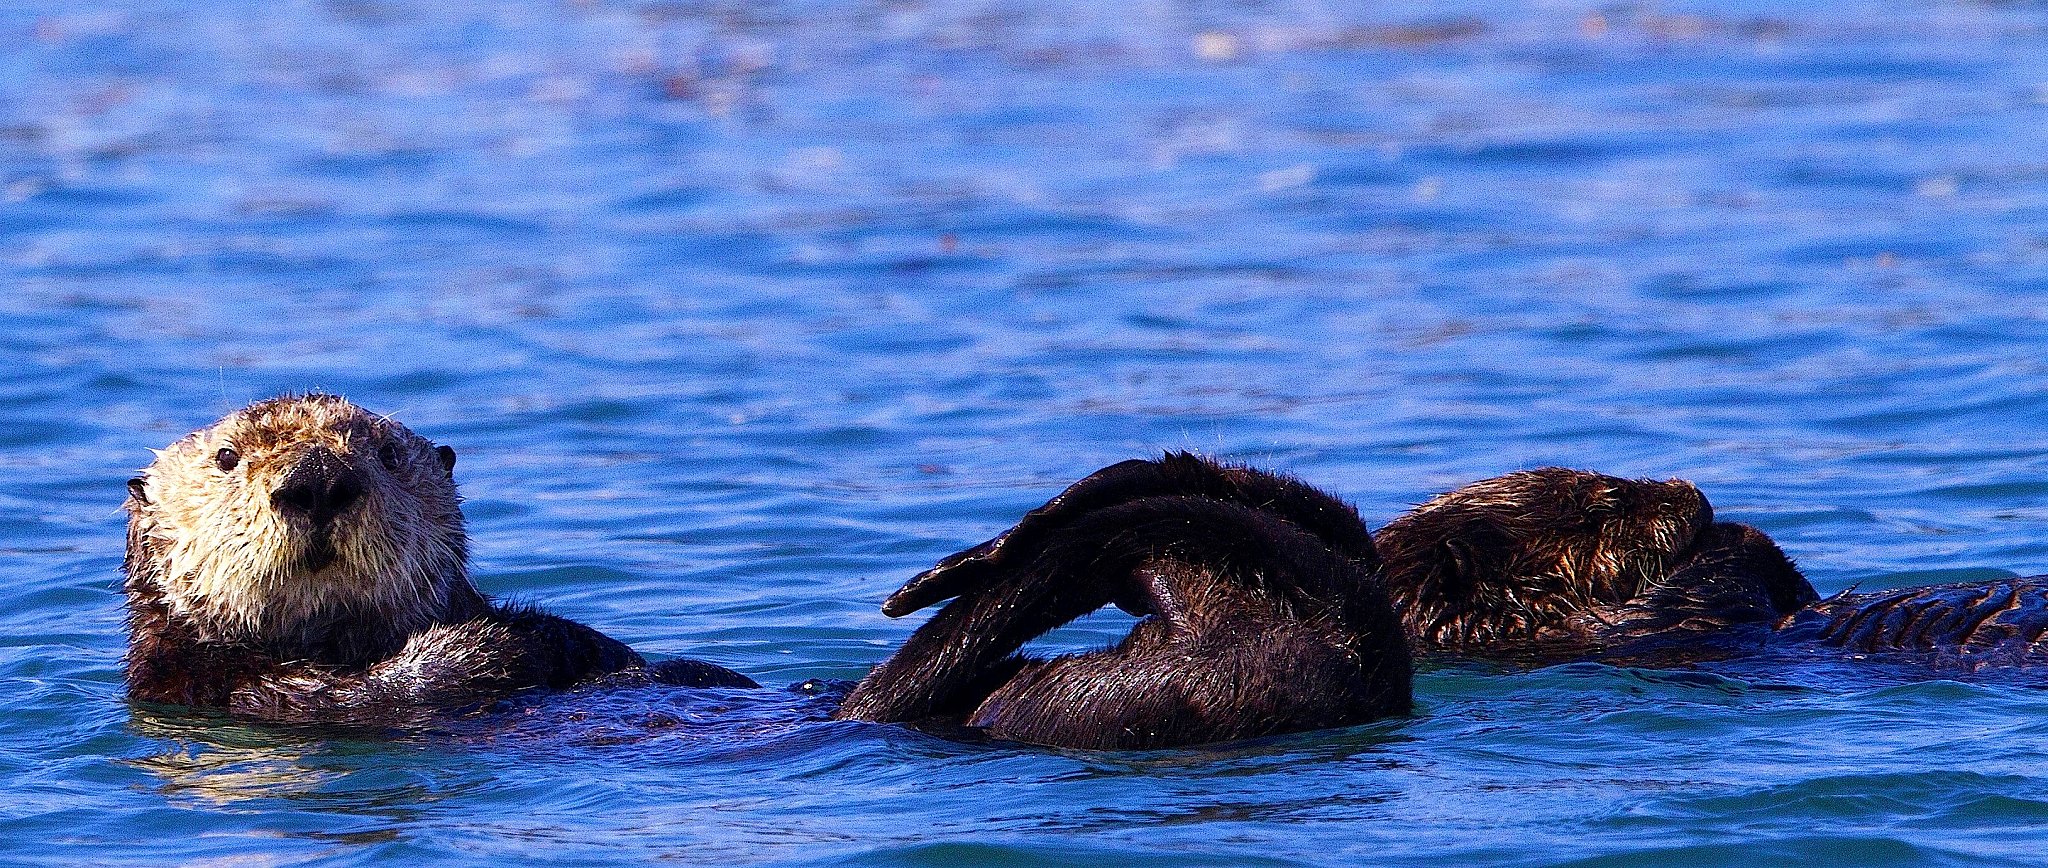 Sea Otter Population Declines Slightly Off California Coast